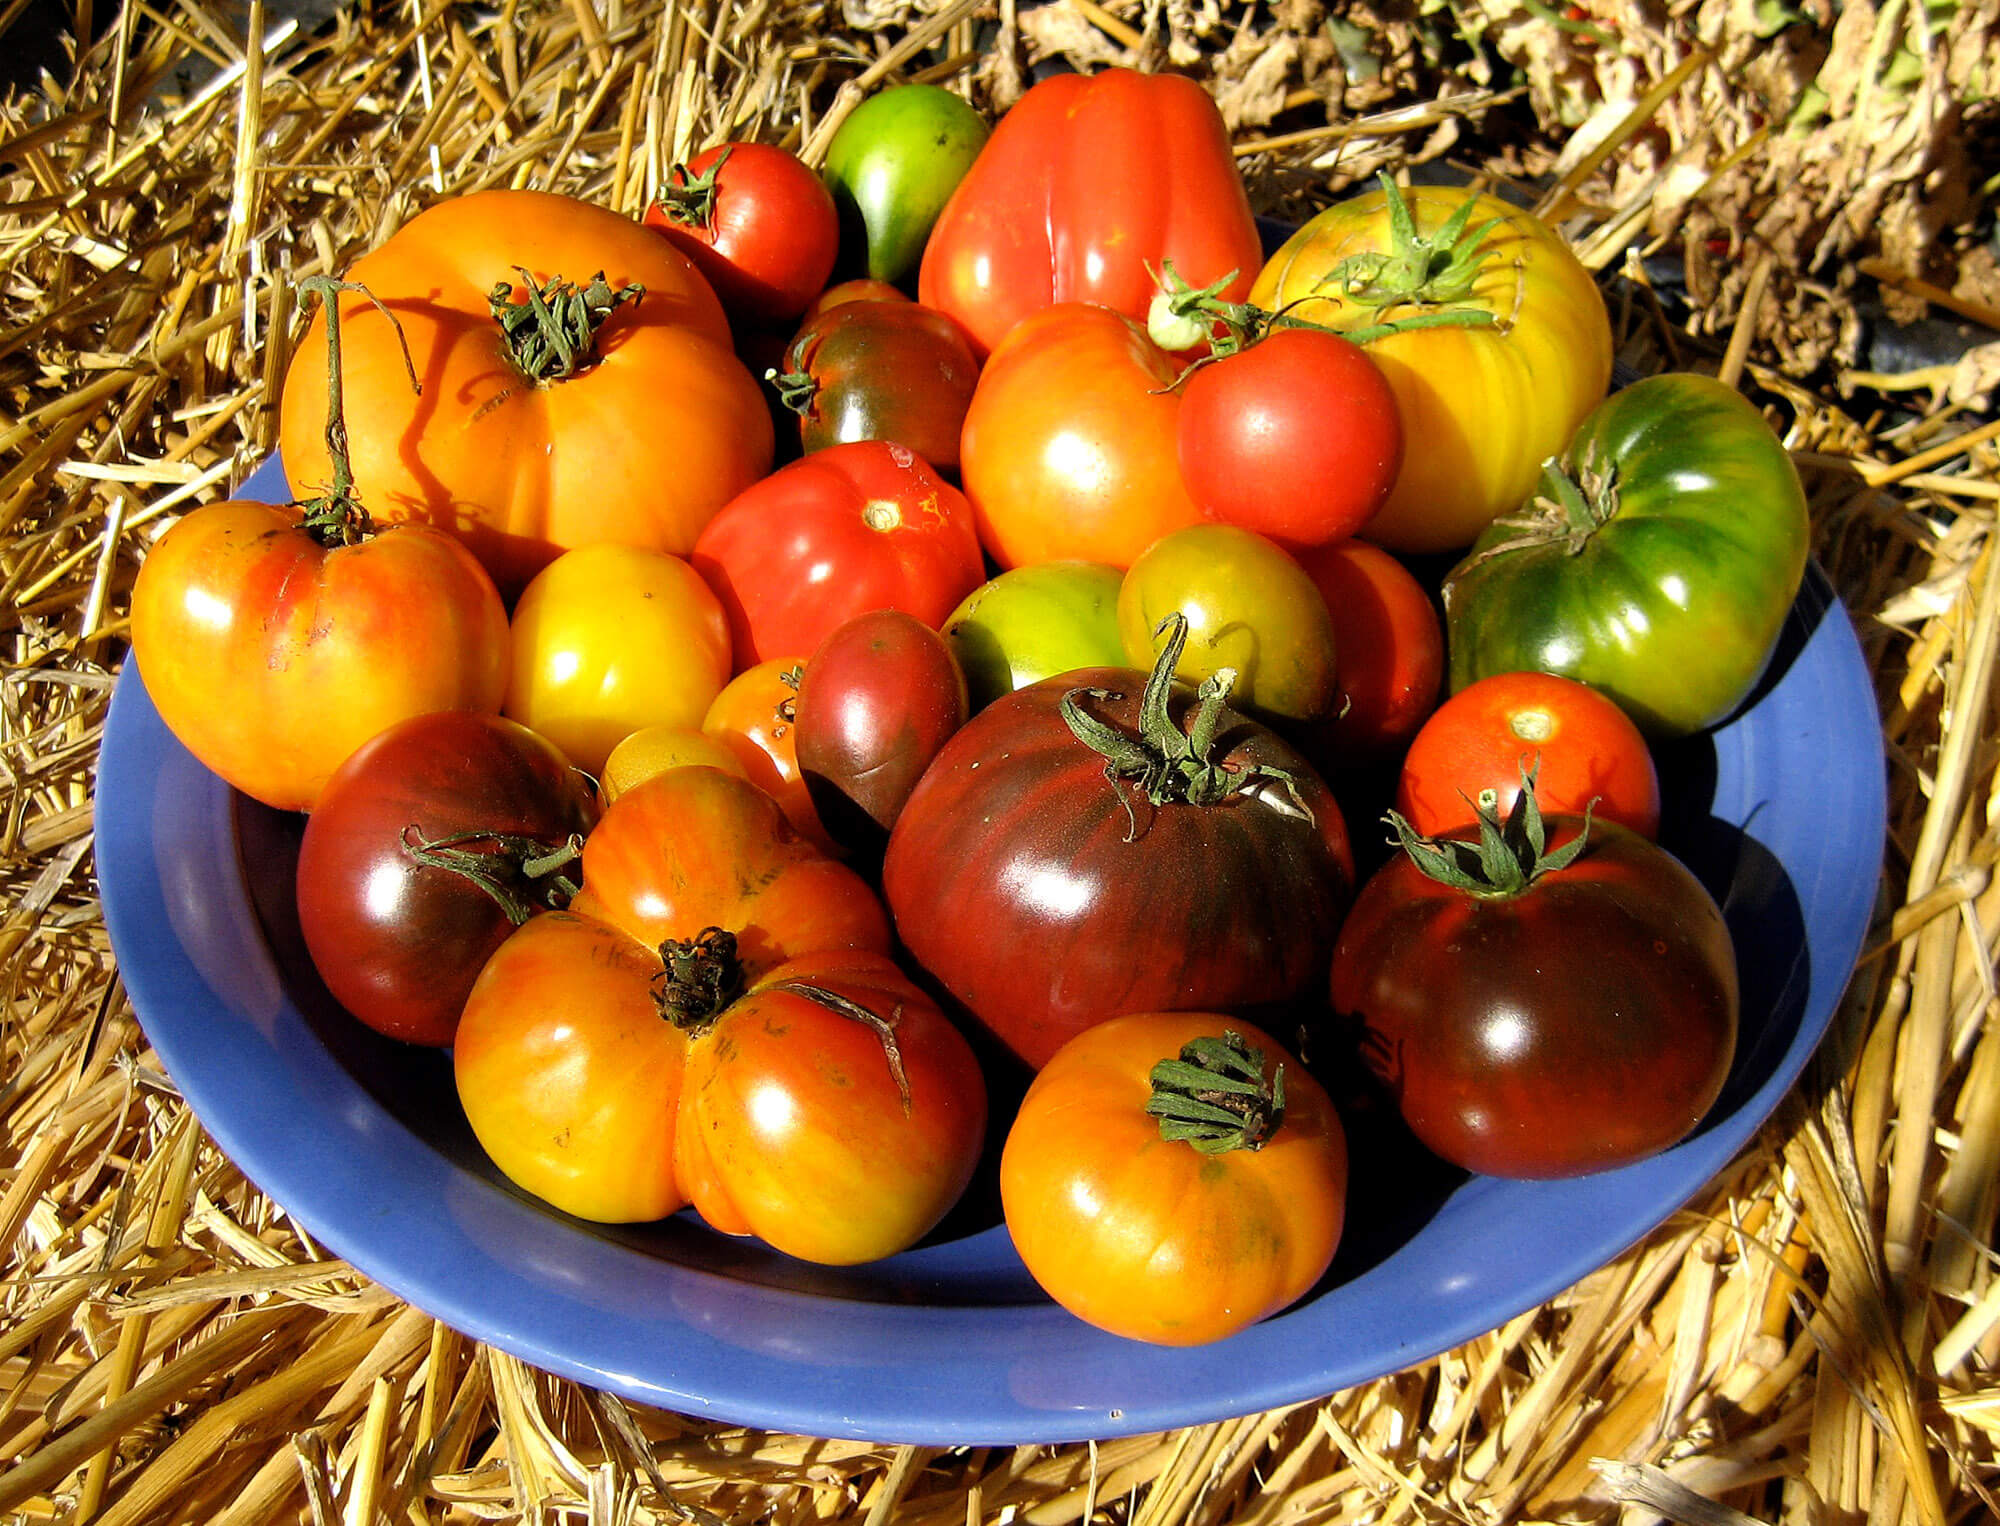 Home Grown tomatoes - Photo by Helen Krayenhoff